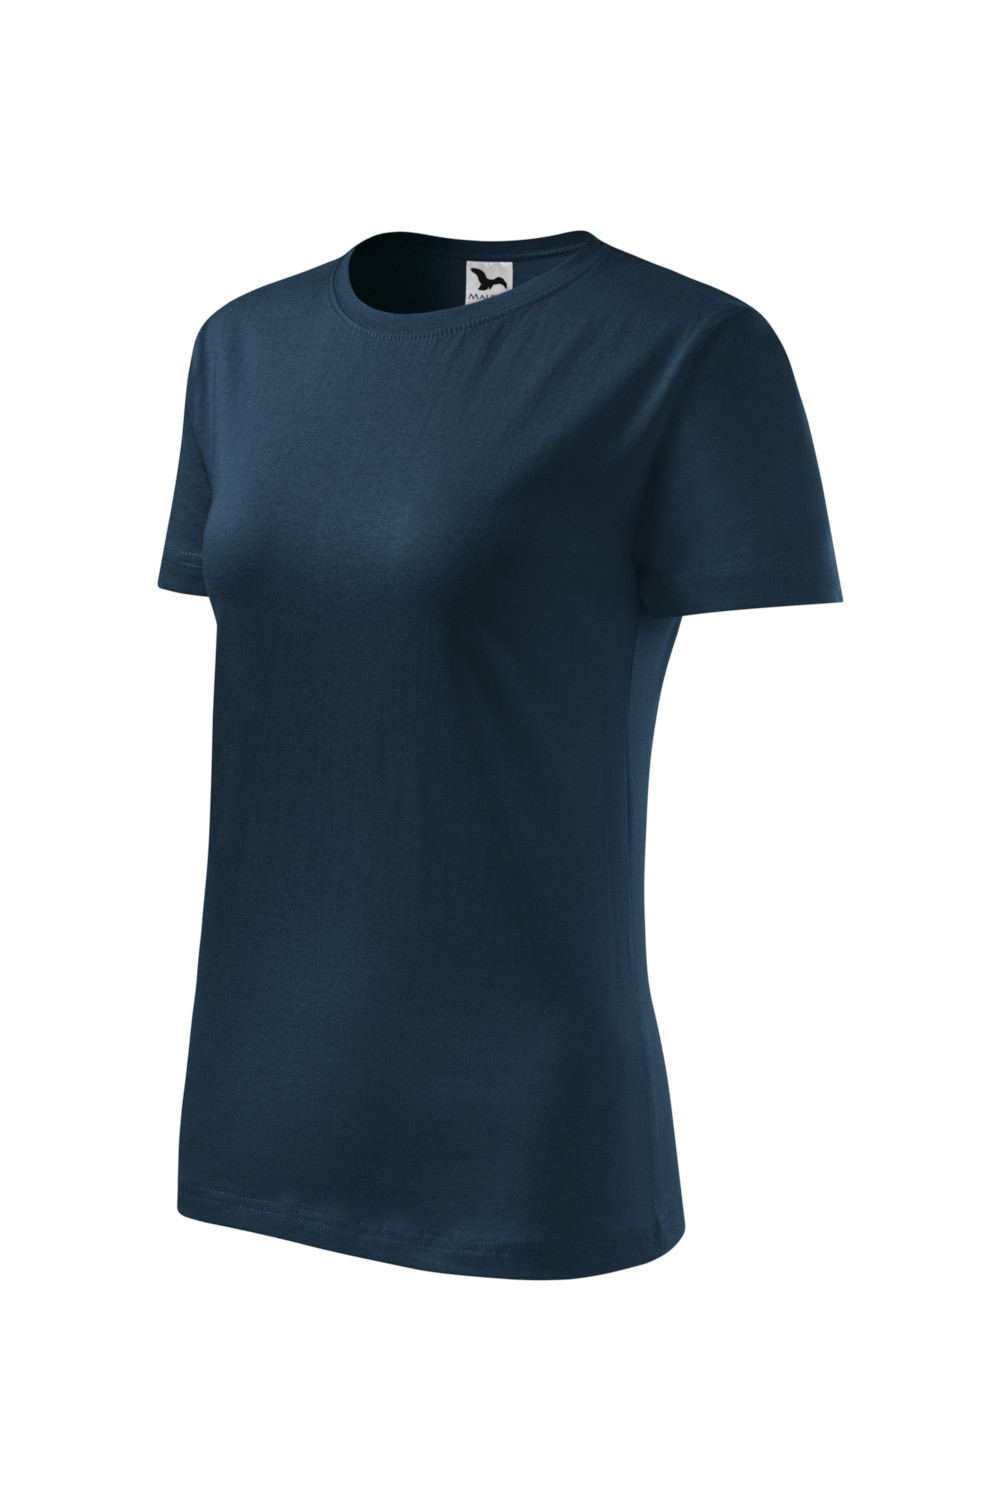 CLASSIC 133 MALFINI Koszulka damska 100% bawełna t-shirt granat